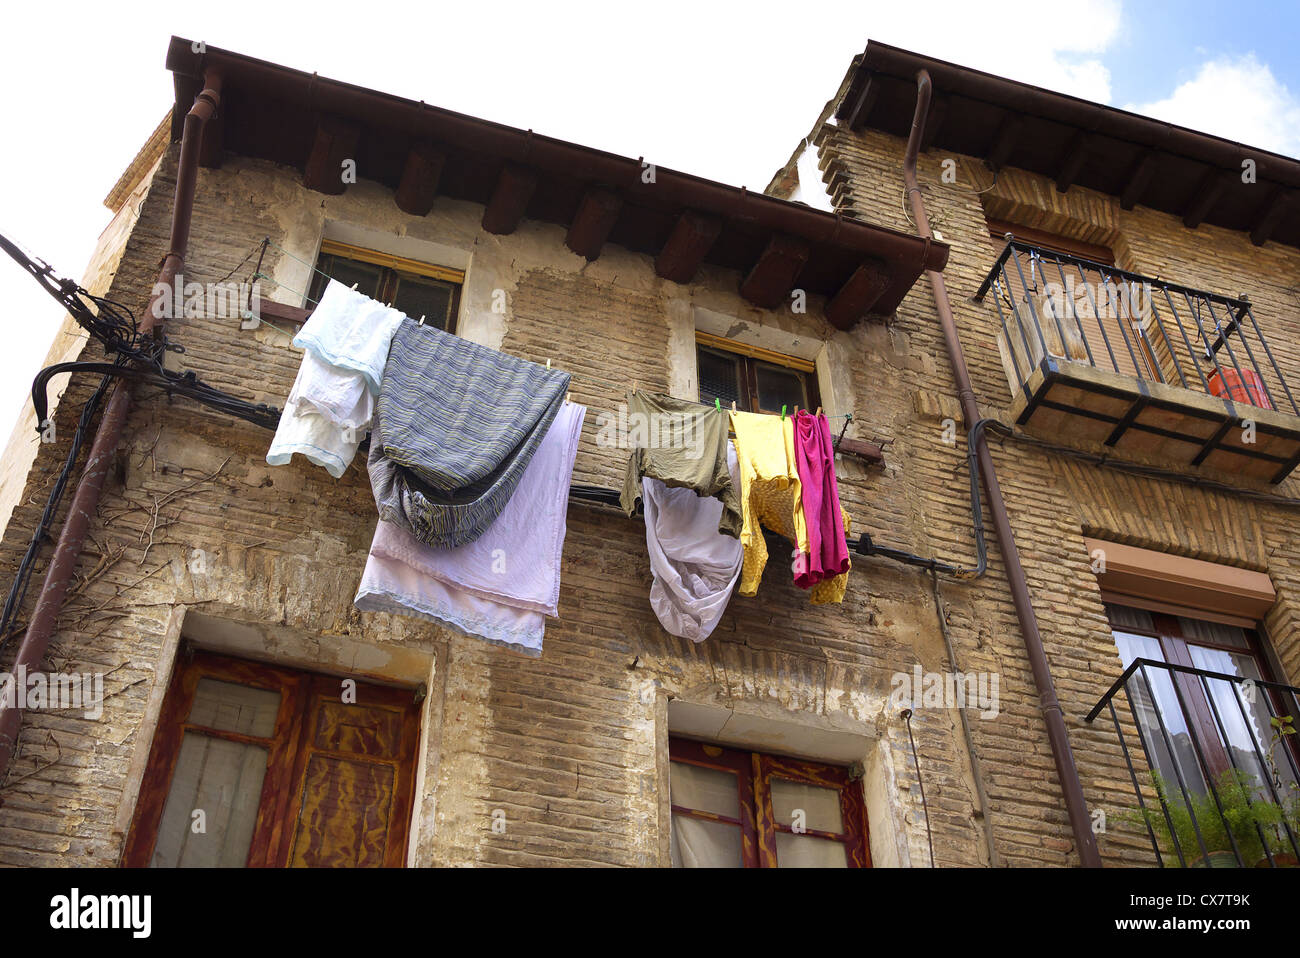 Washing hanging from upstairs windows in Estella, Spain. Stock Photo